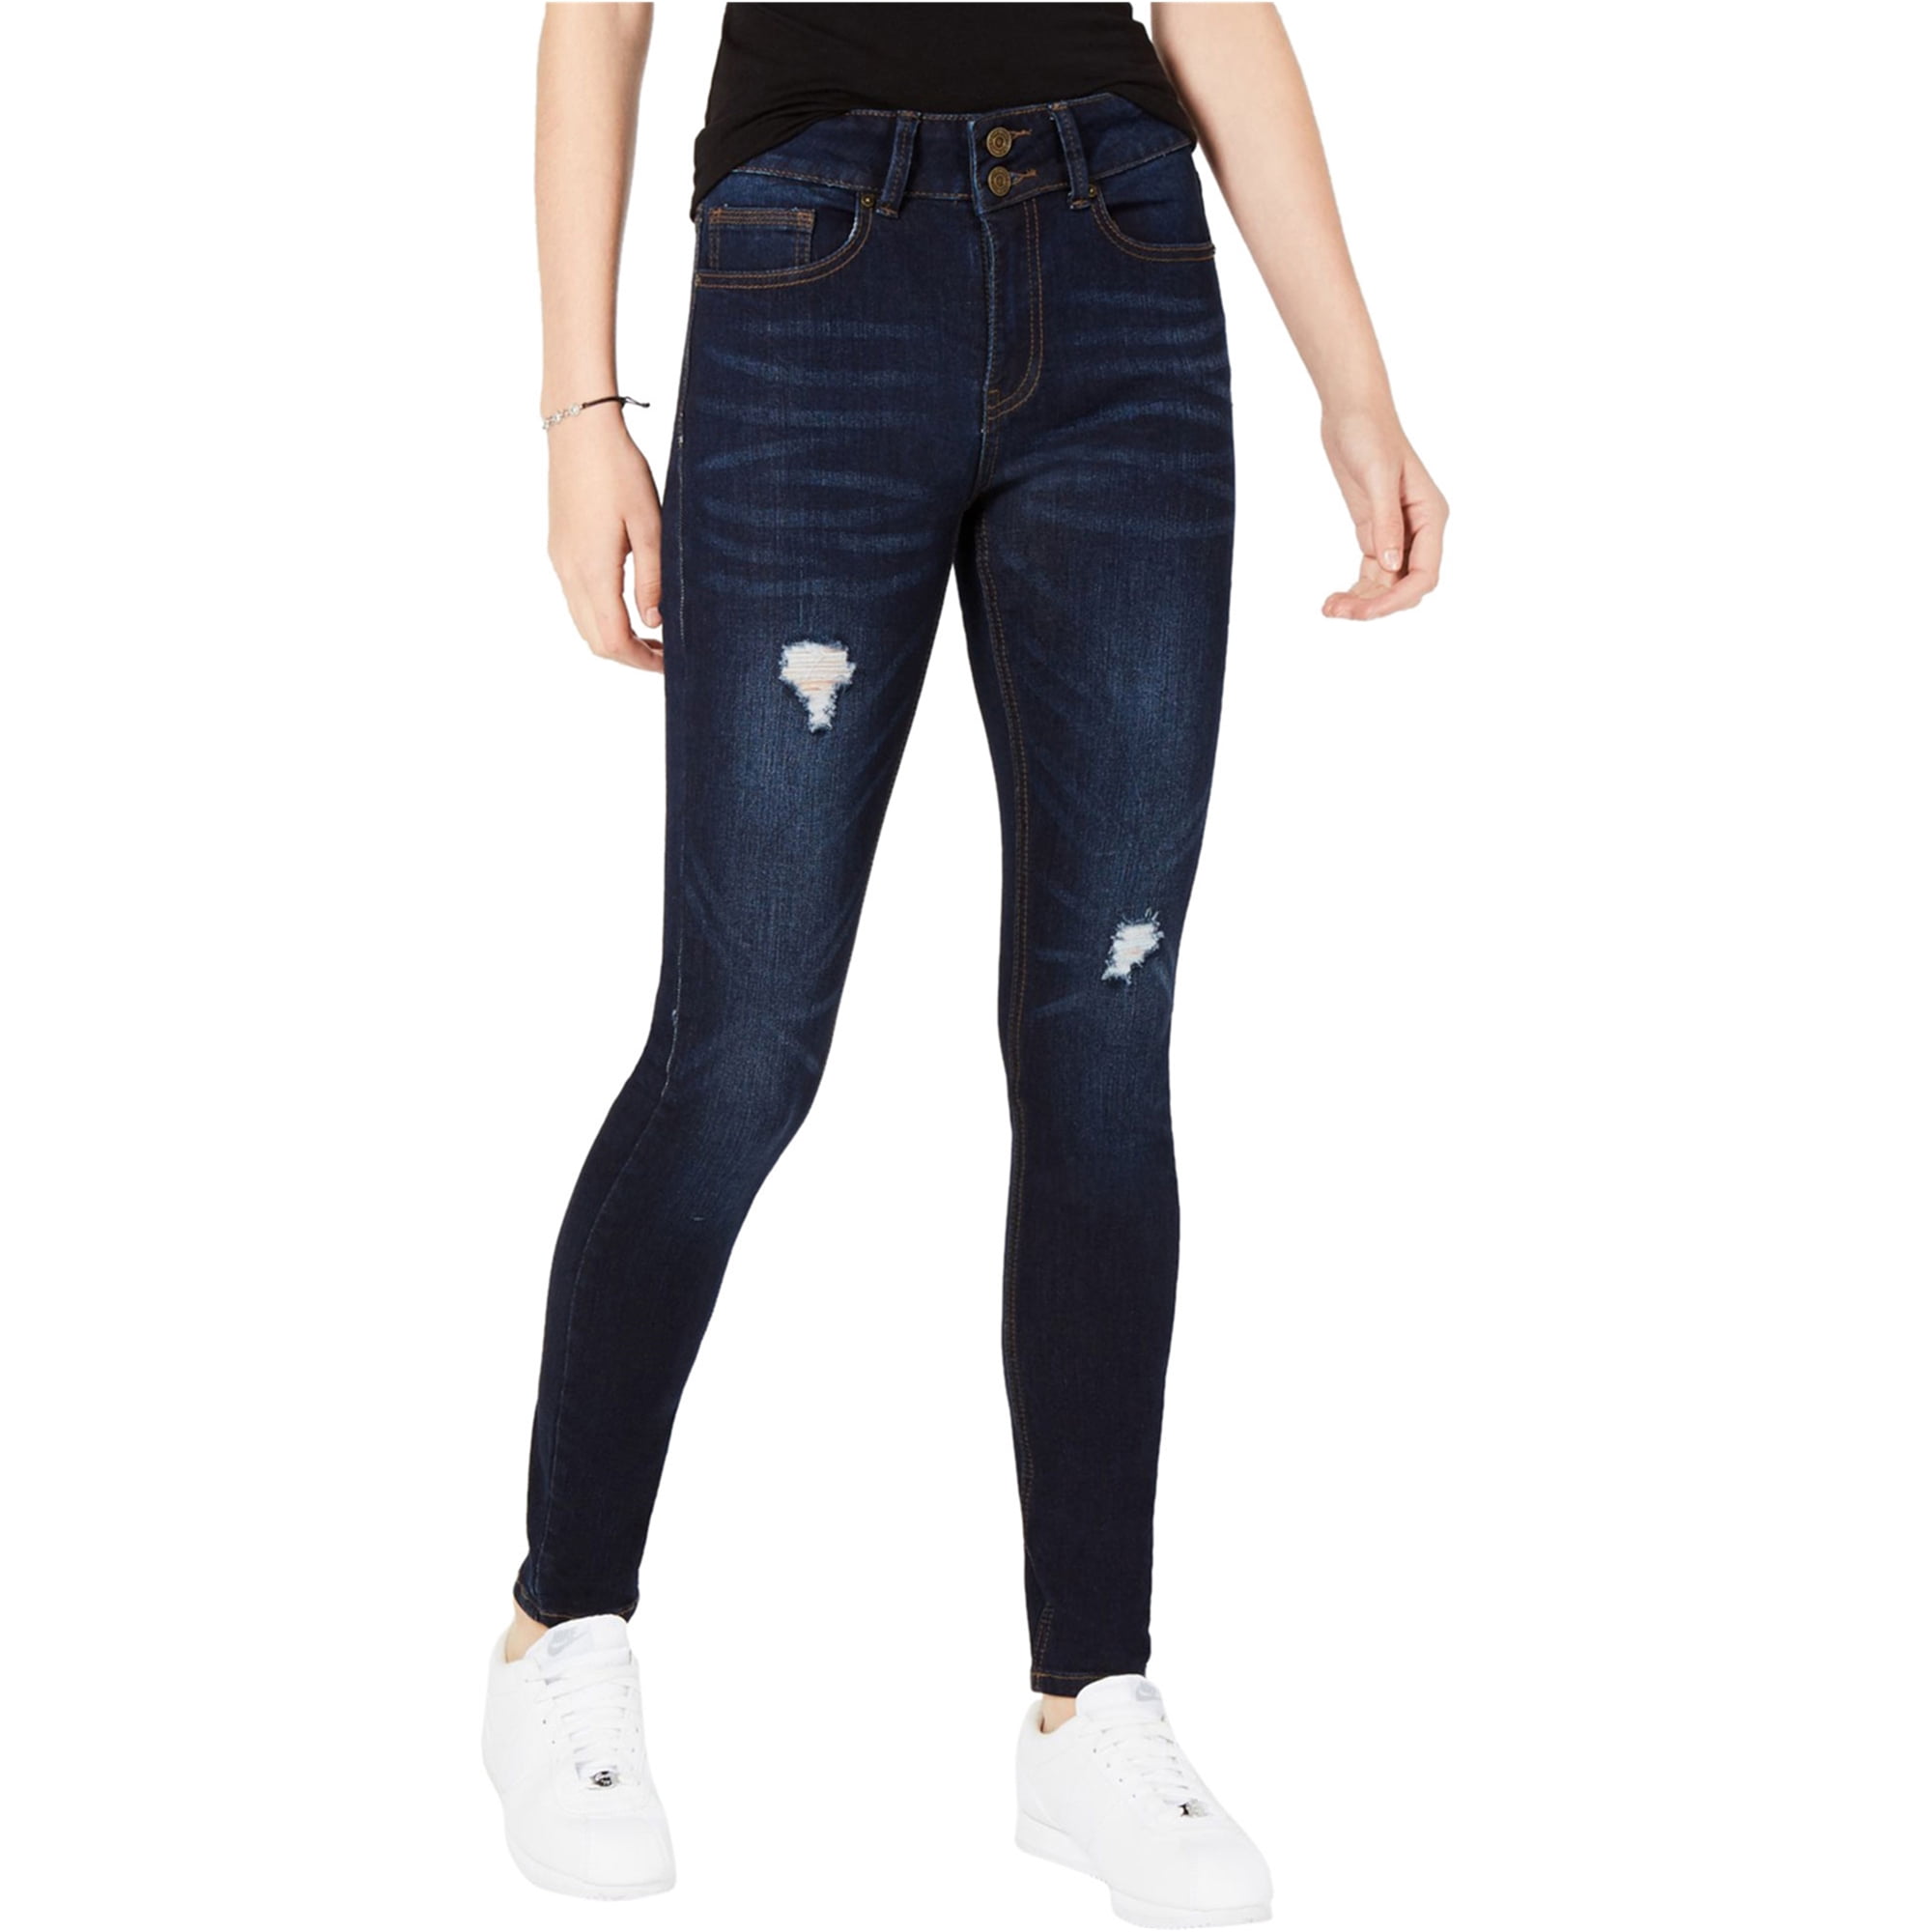 Indigo Rein - Indigo Rein Womens Ripped Skinny Fit Jeans - Walmart.com ...